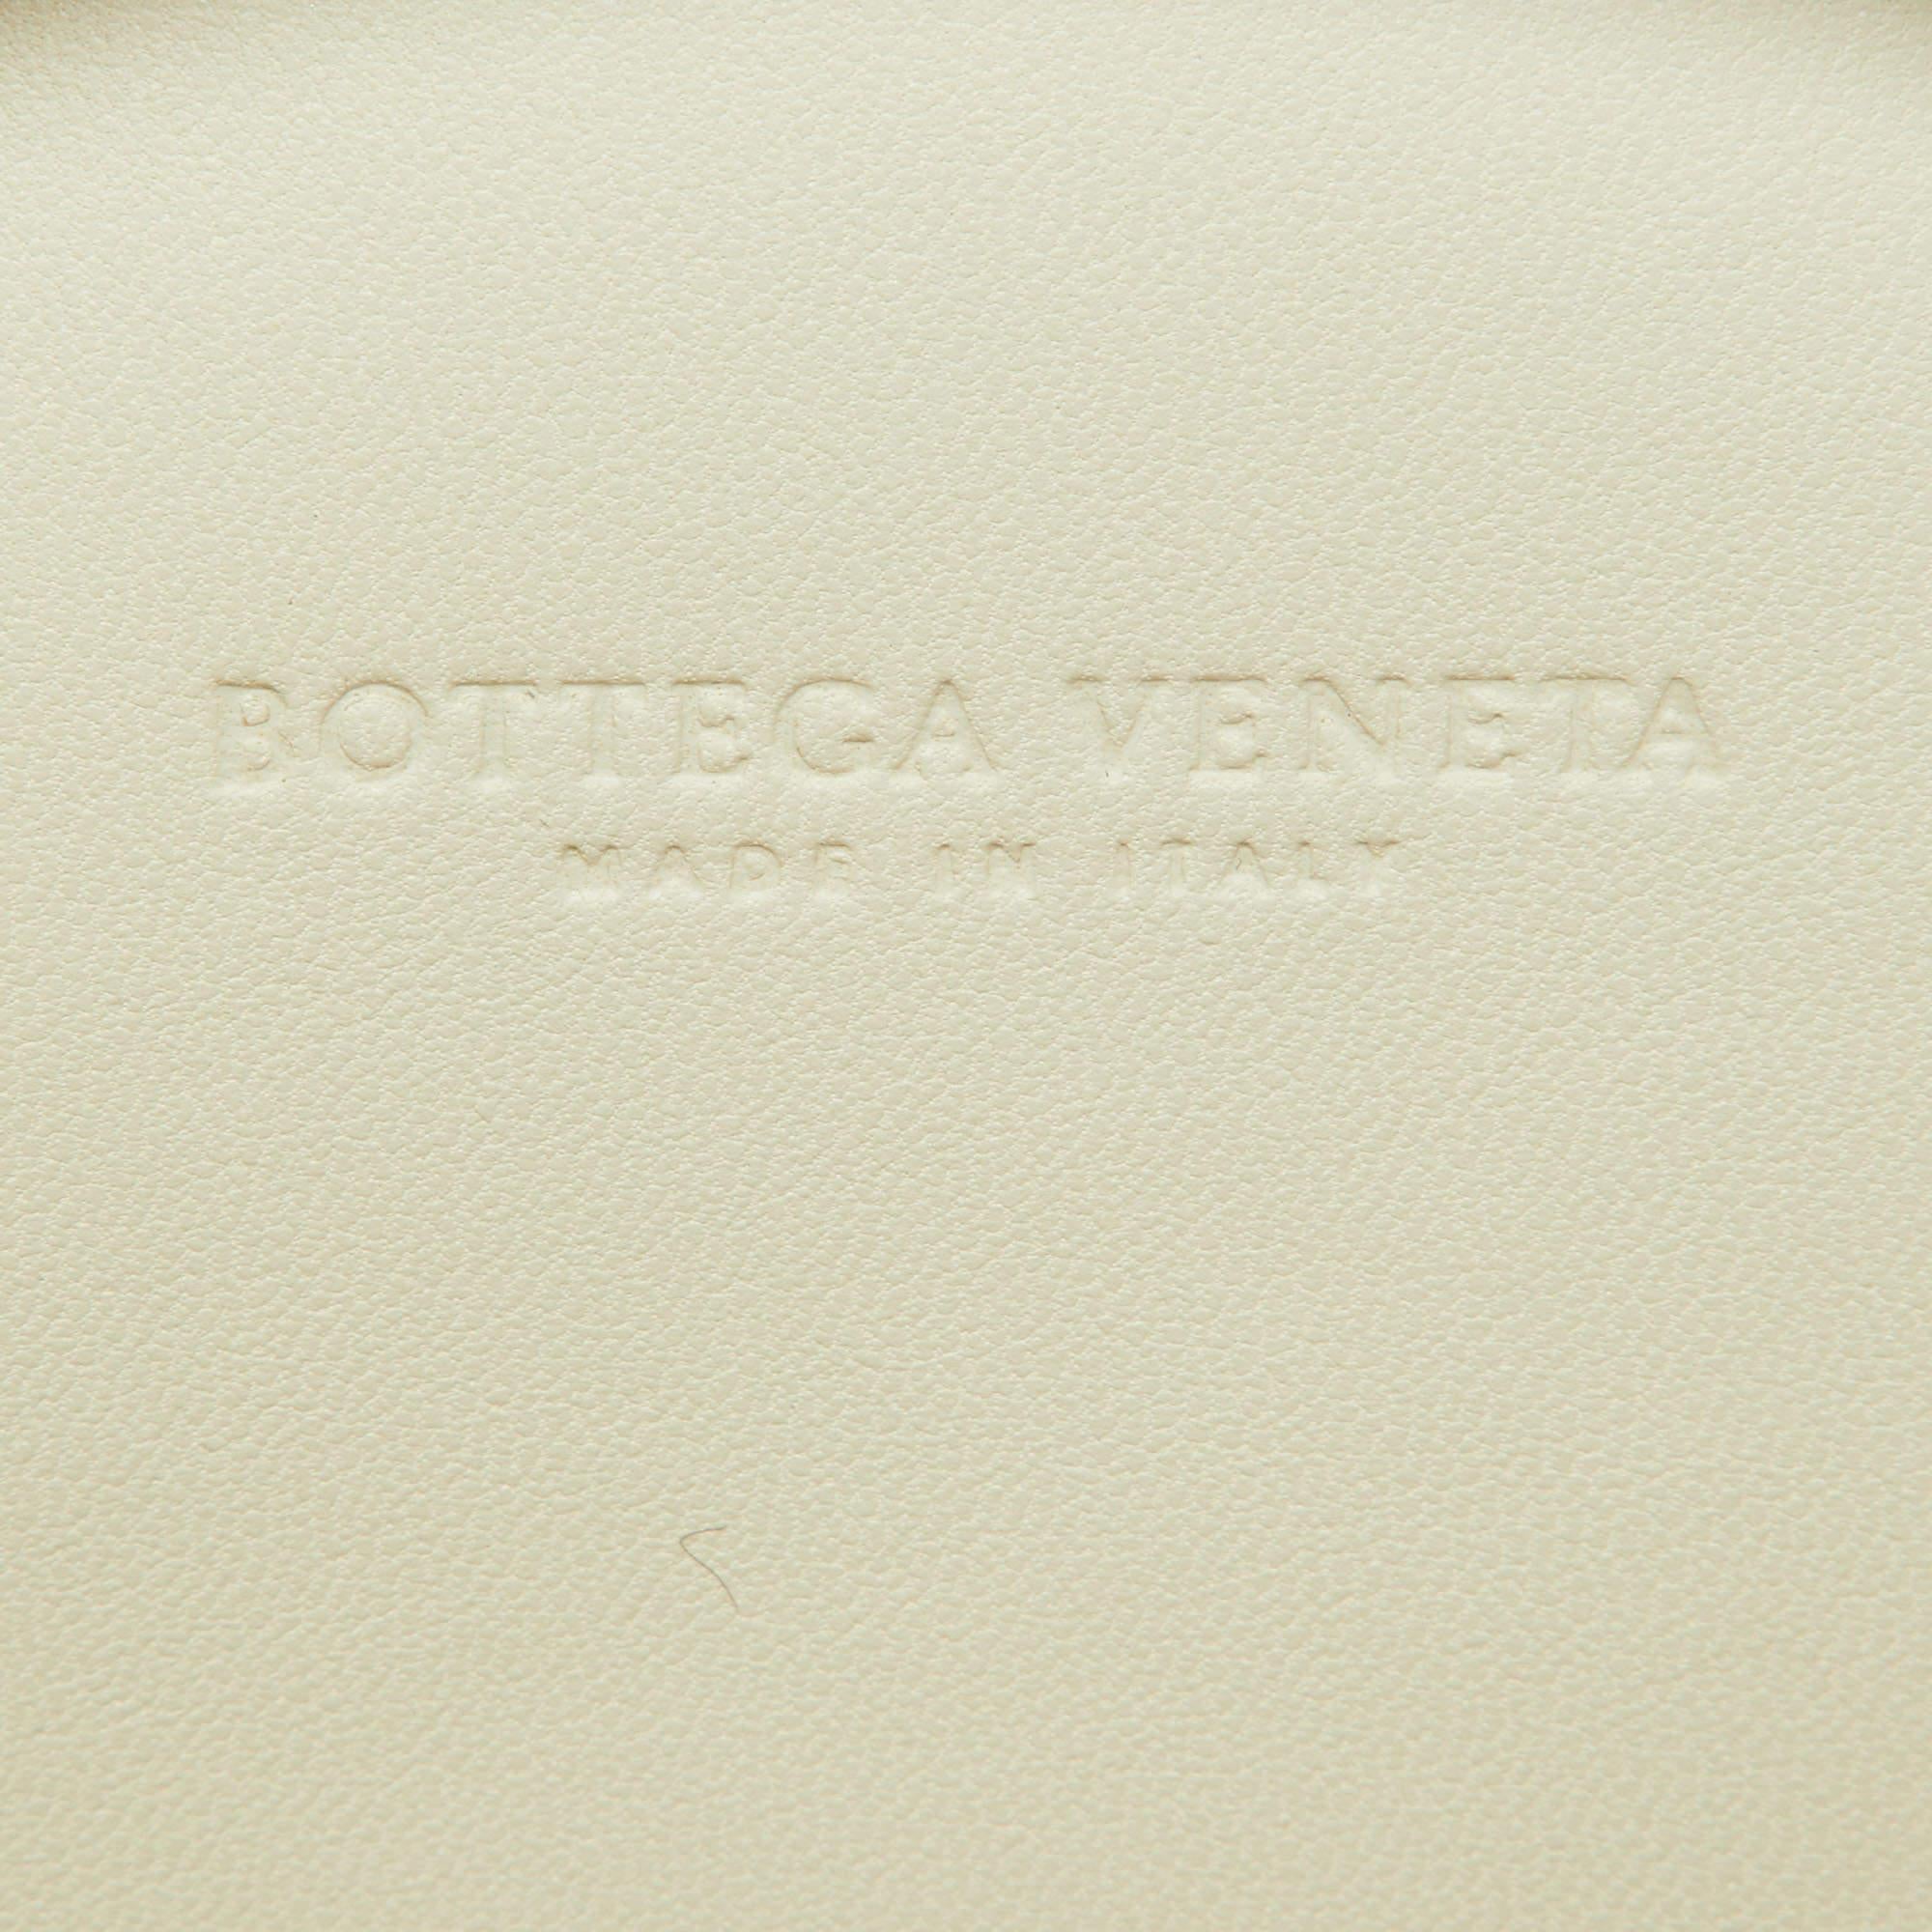 Bottega Veneta Silver/Gold Metal Chain Clutch 1